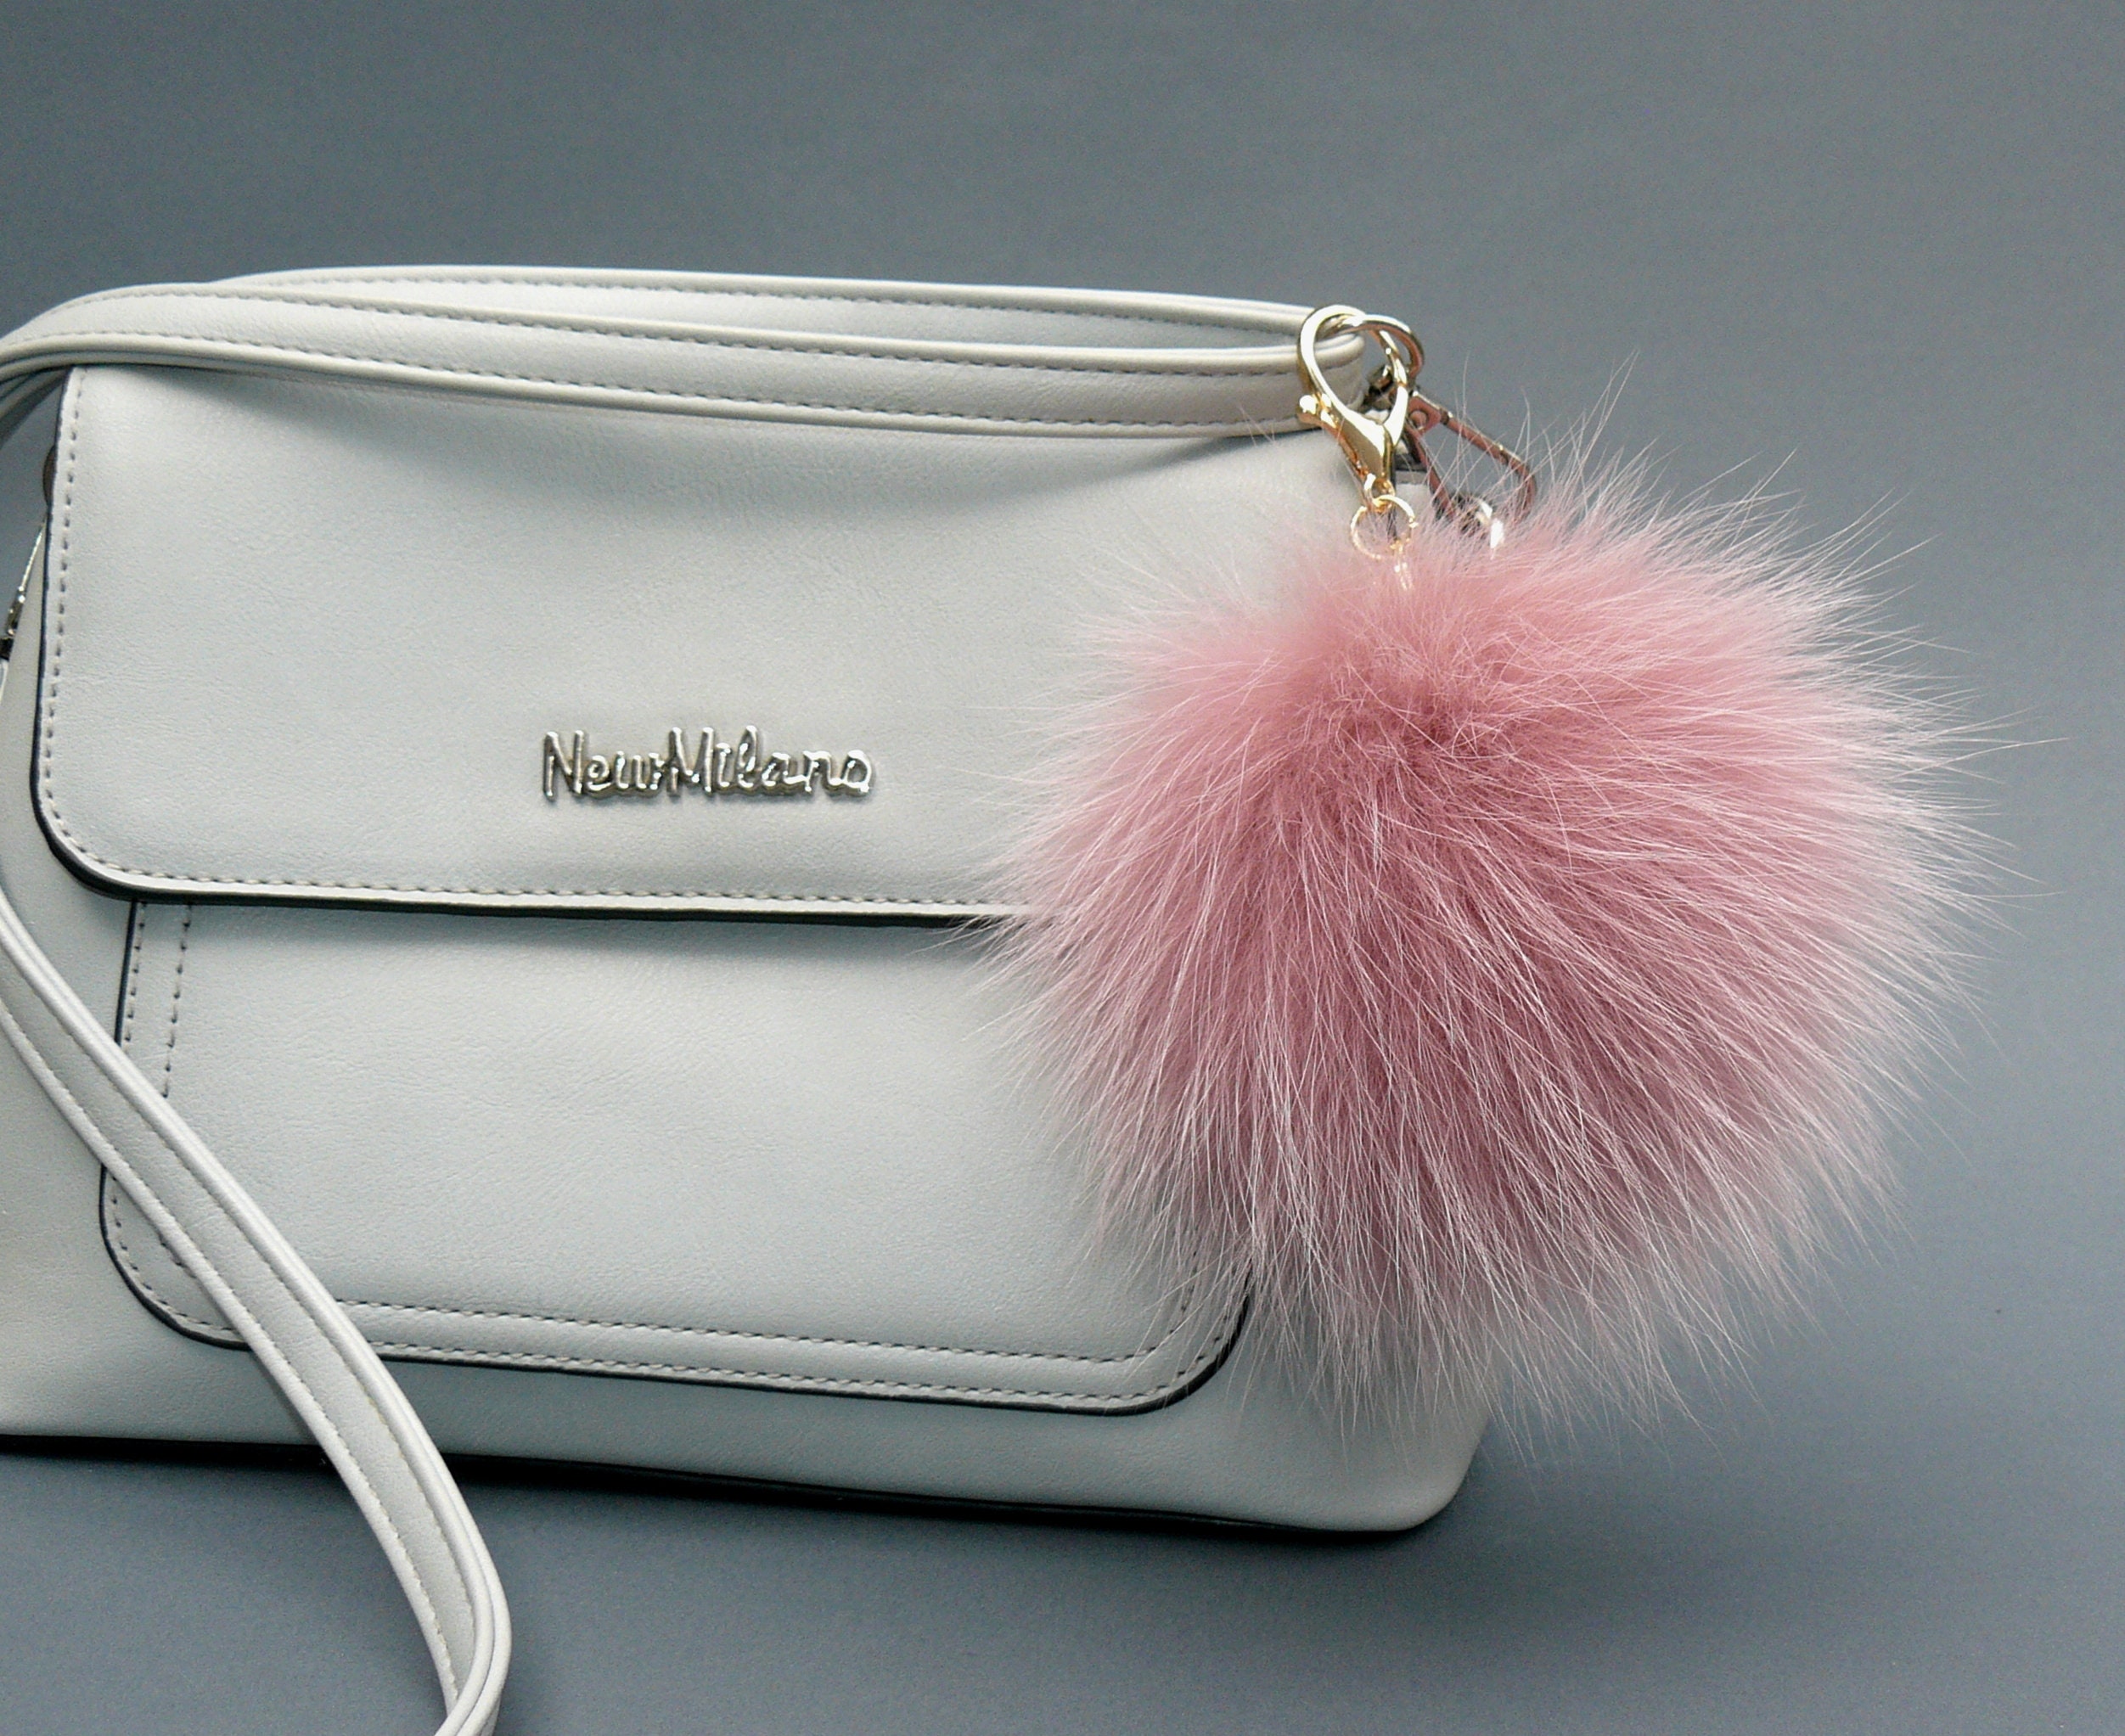 Fur Pompom Keychain Rose Pink Furry Key Chain Bag Charm Fluffy | Etsy